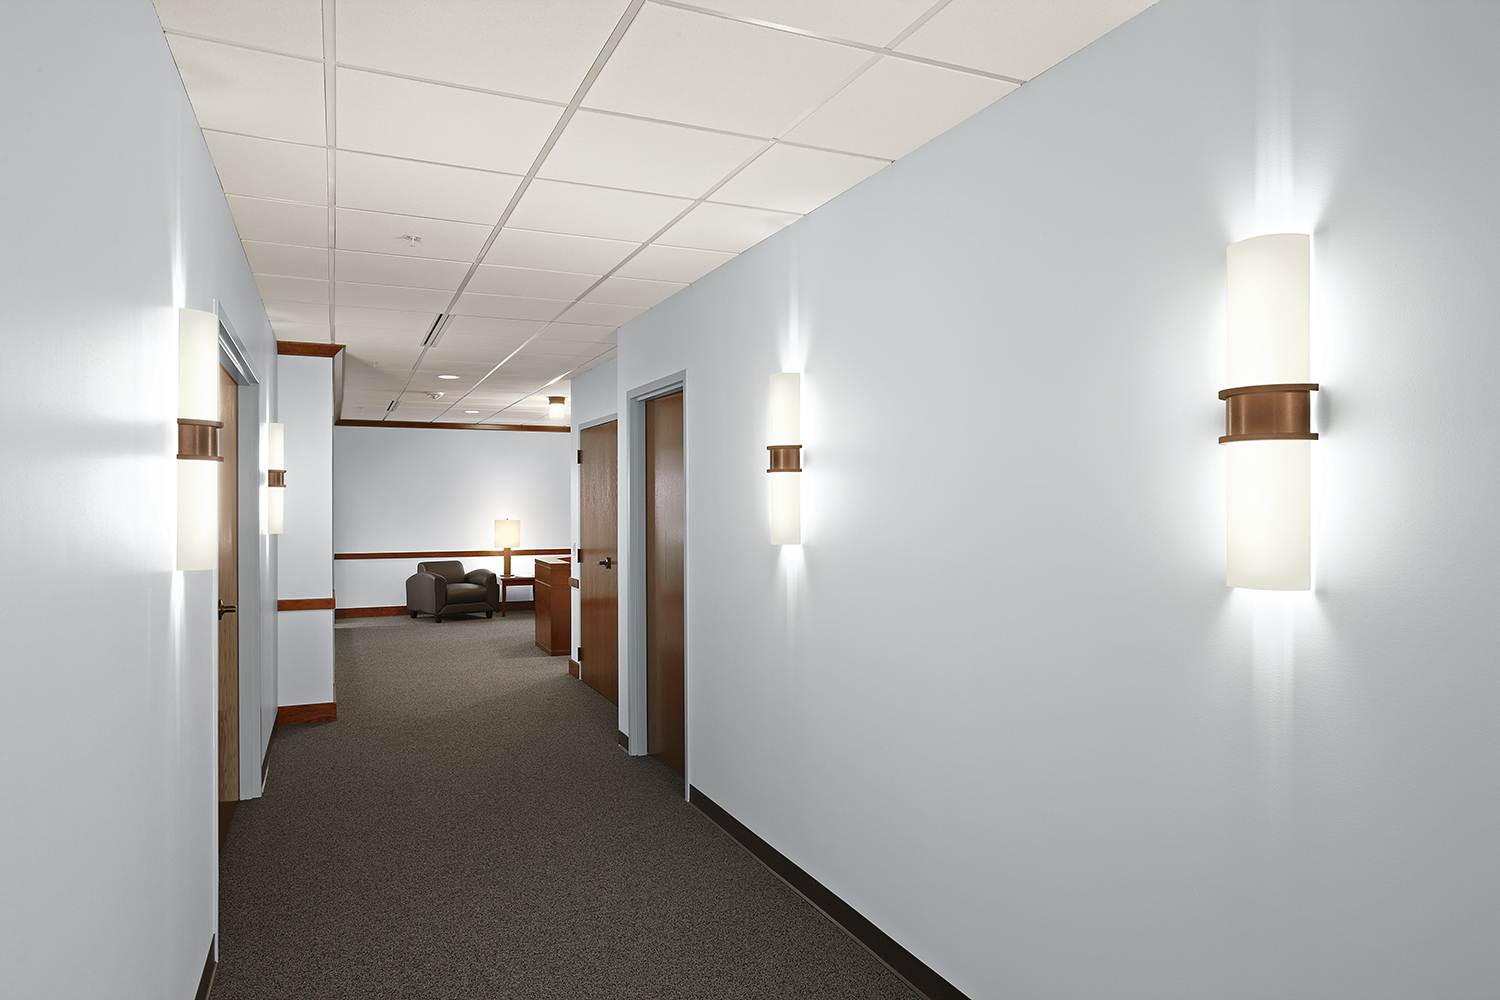 Pila sconces make stylish office lighting fixtures along a workplace corridor.